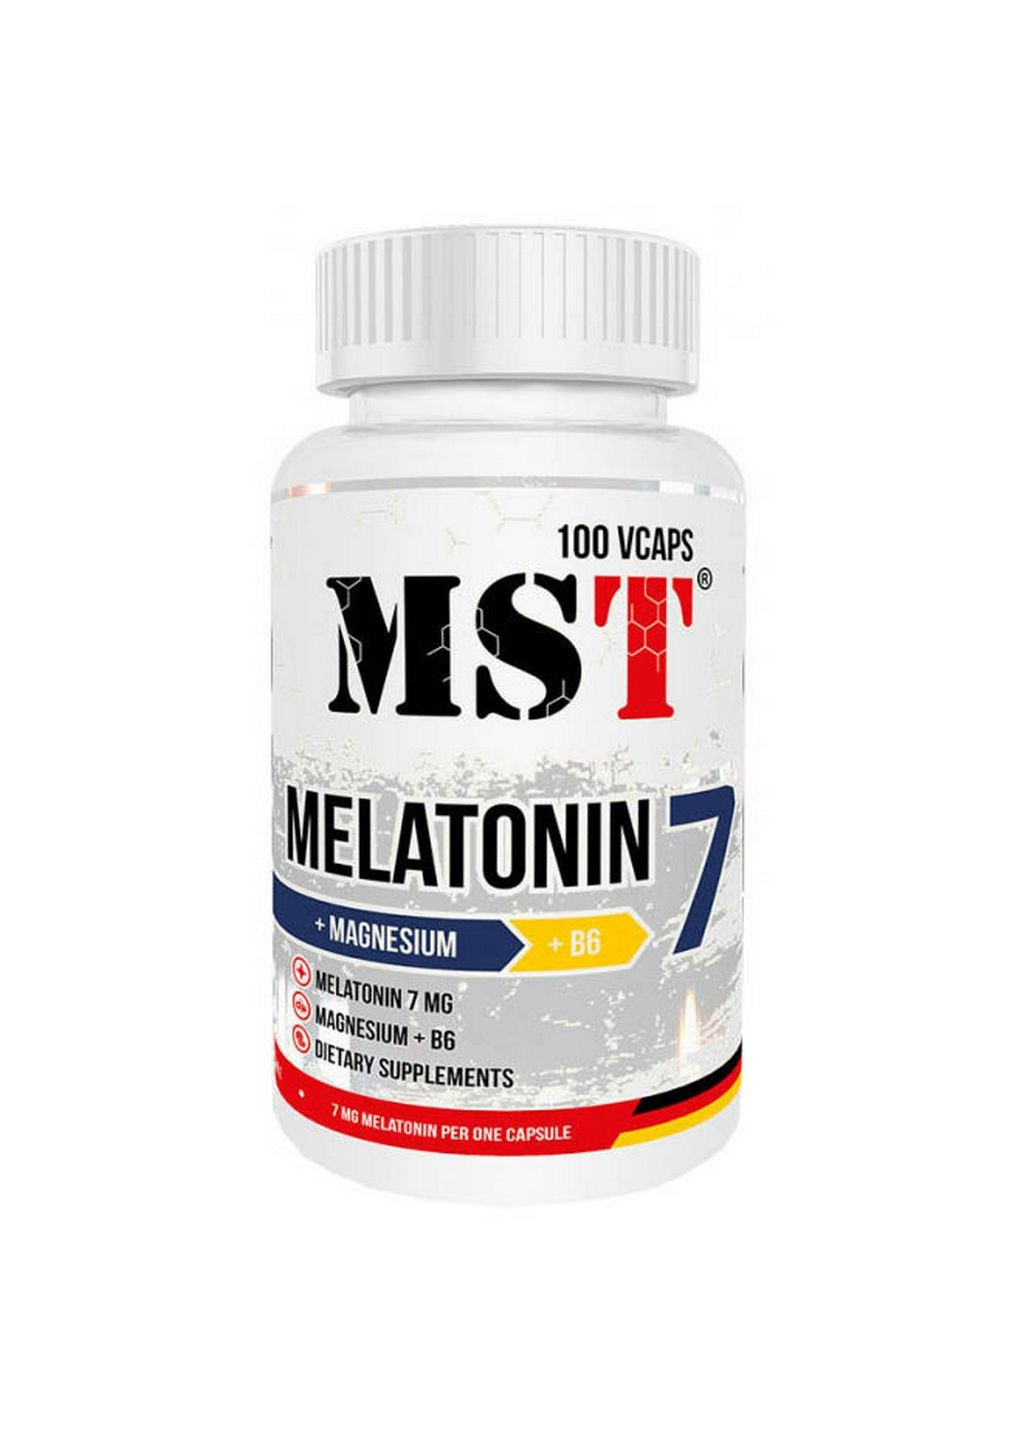 Натуральна добавка Melatonin 7 + Magnesium + B6, 100 вегакапсул MST (293340897)